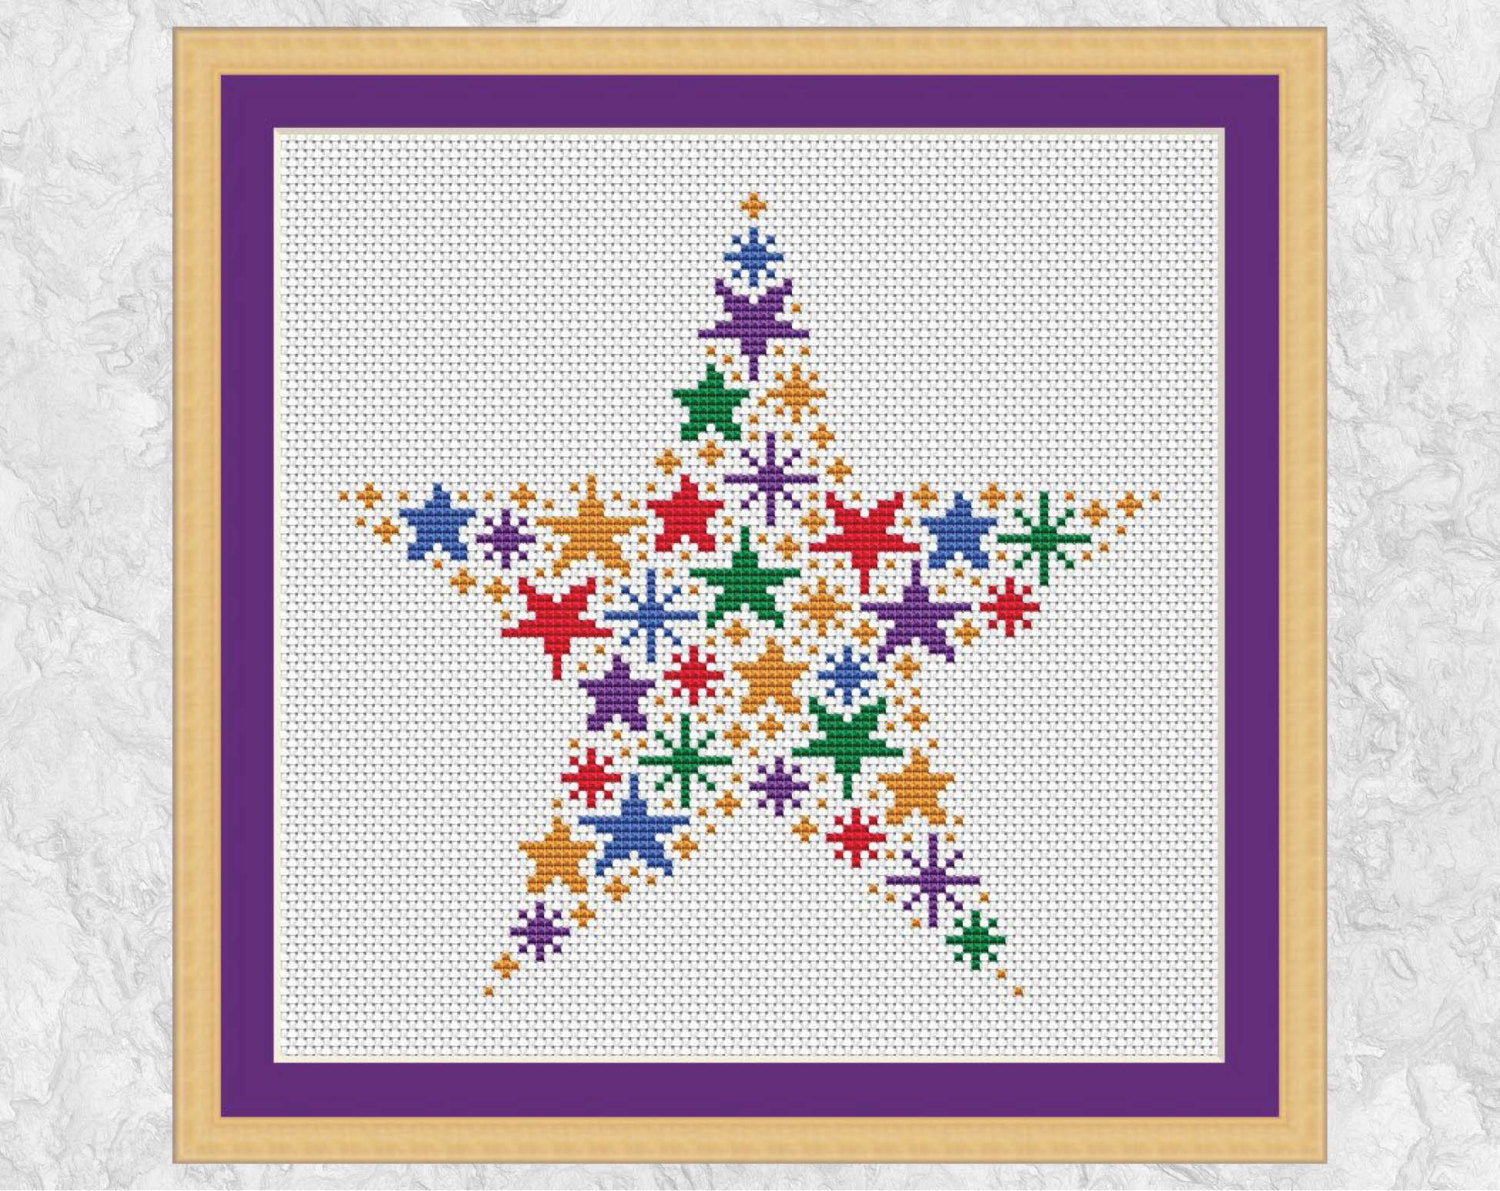 Rainbow Star of Stars cross stitch pattern - with frame